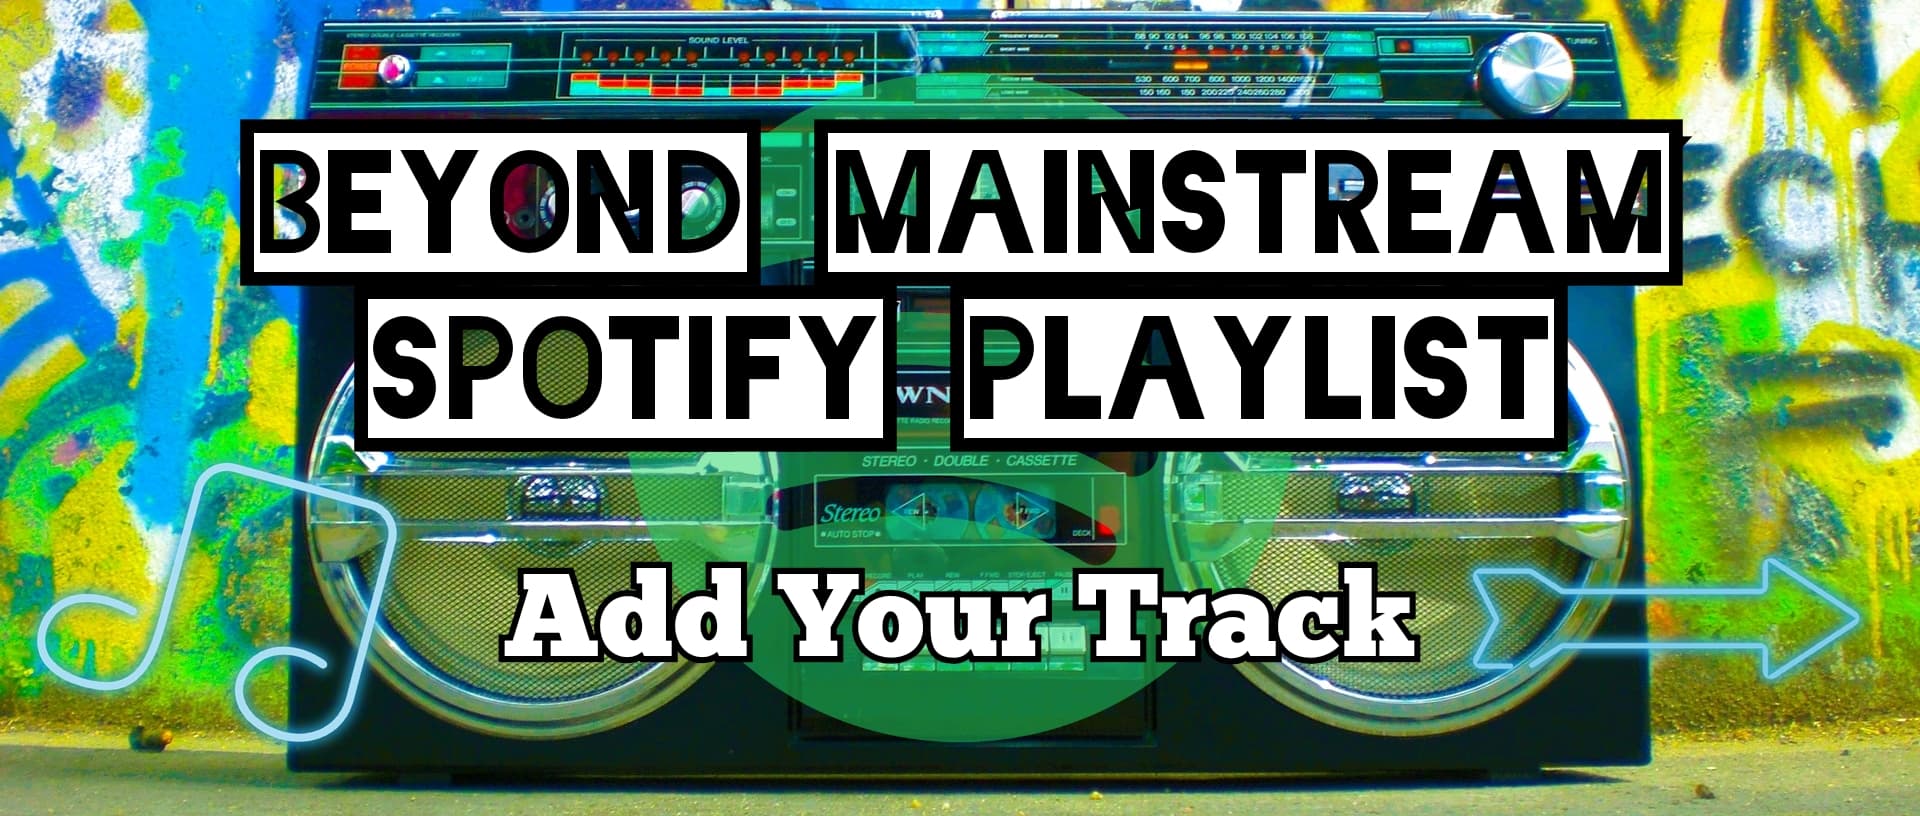 Spotify Beyond Mainstream Indie Music Playlist